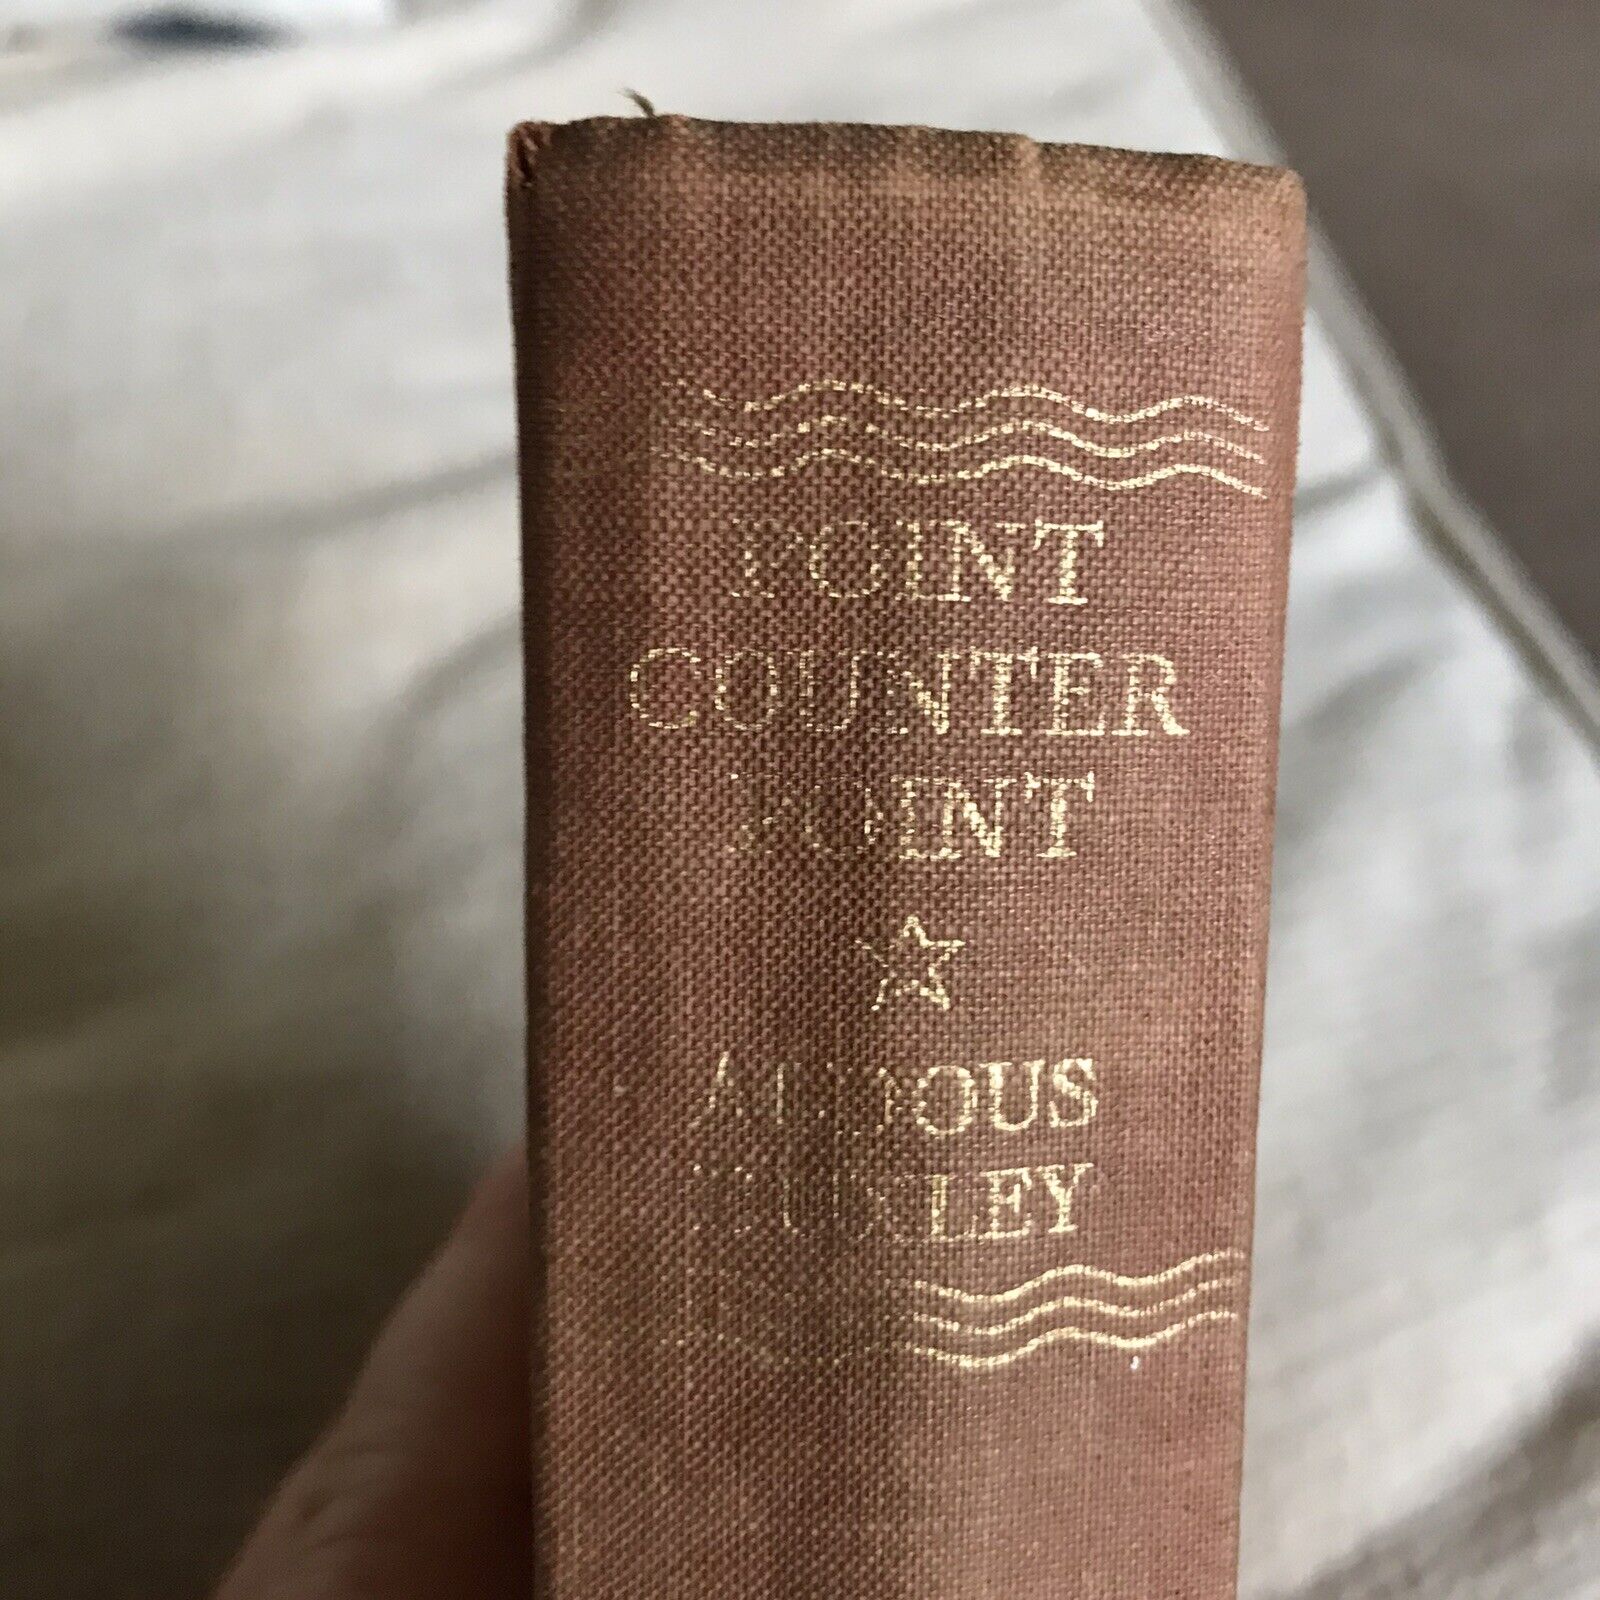 1947*1st* Point Counter Point - Aldous Huxley (Chatto & Windus) Honeyburn Books (UK)